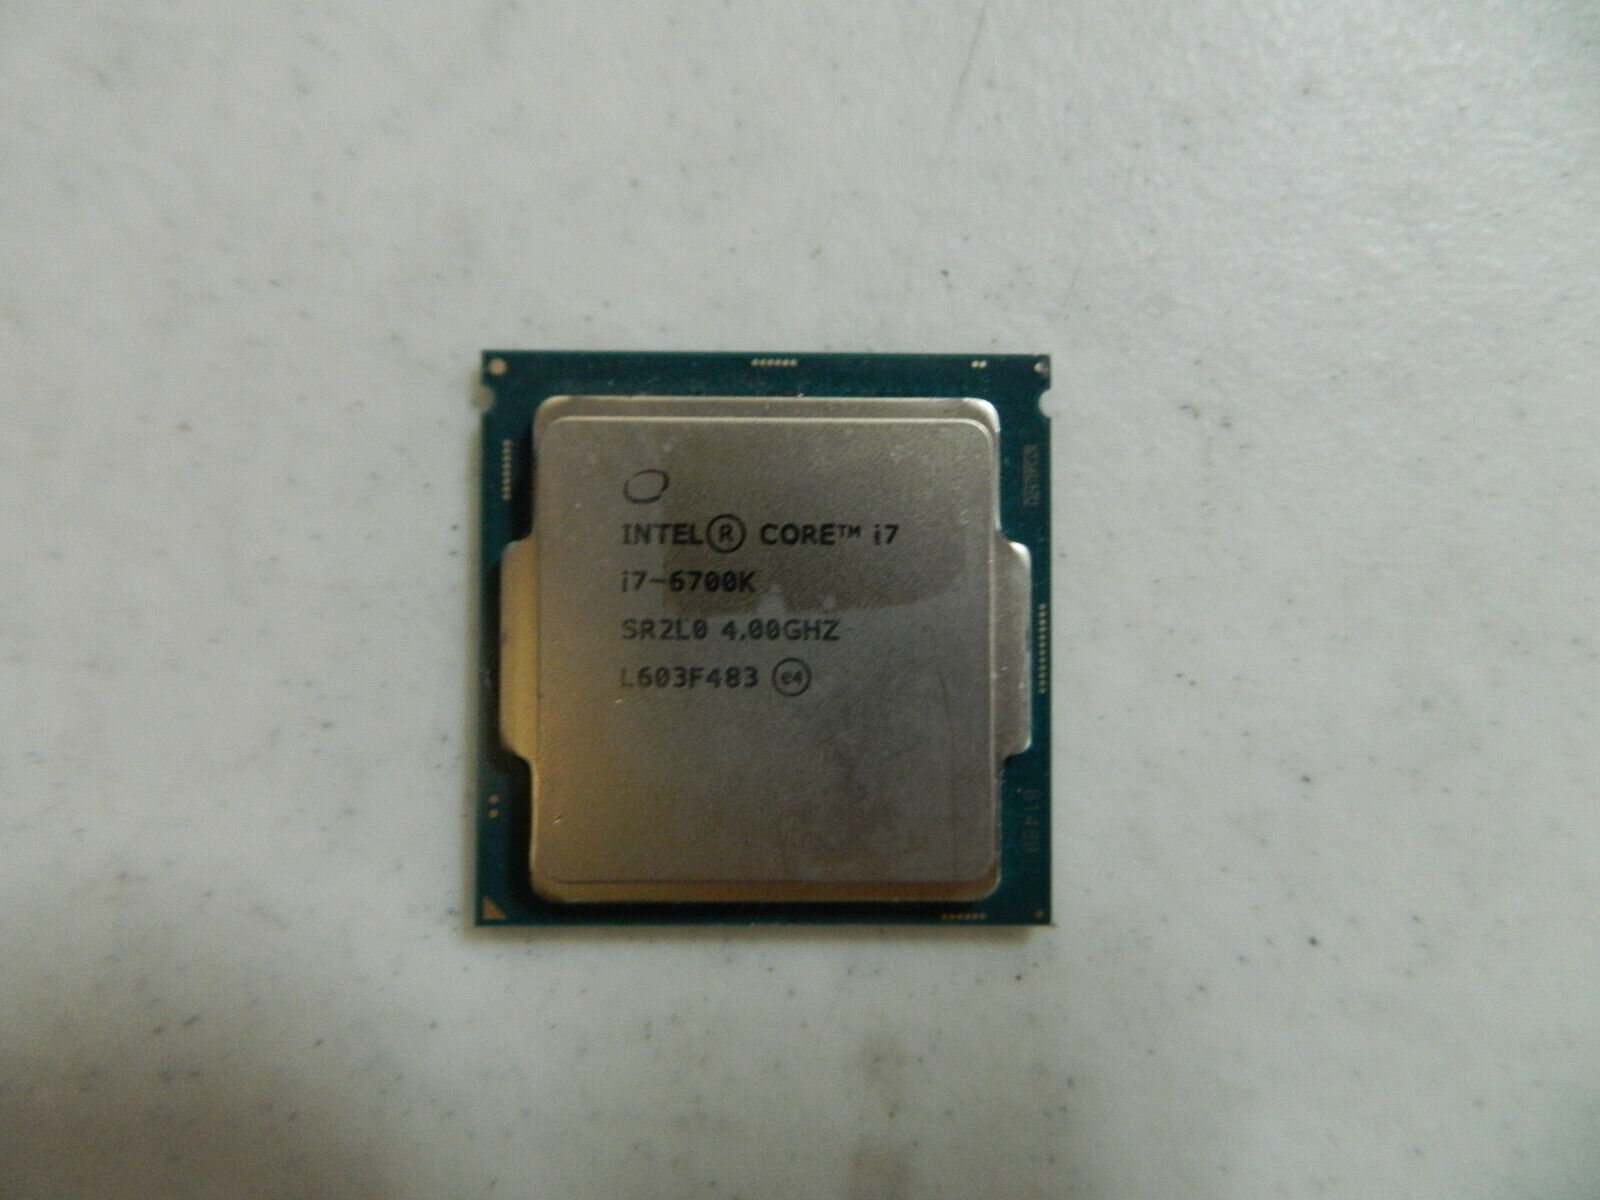 [ Bulk Of 2 ] Intel i7-6700K SR2L0 4.00GHZ Processor